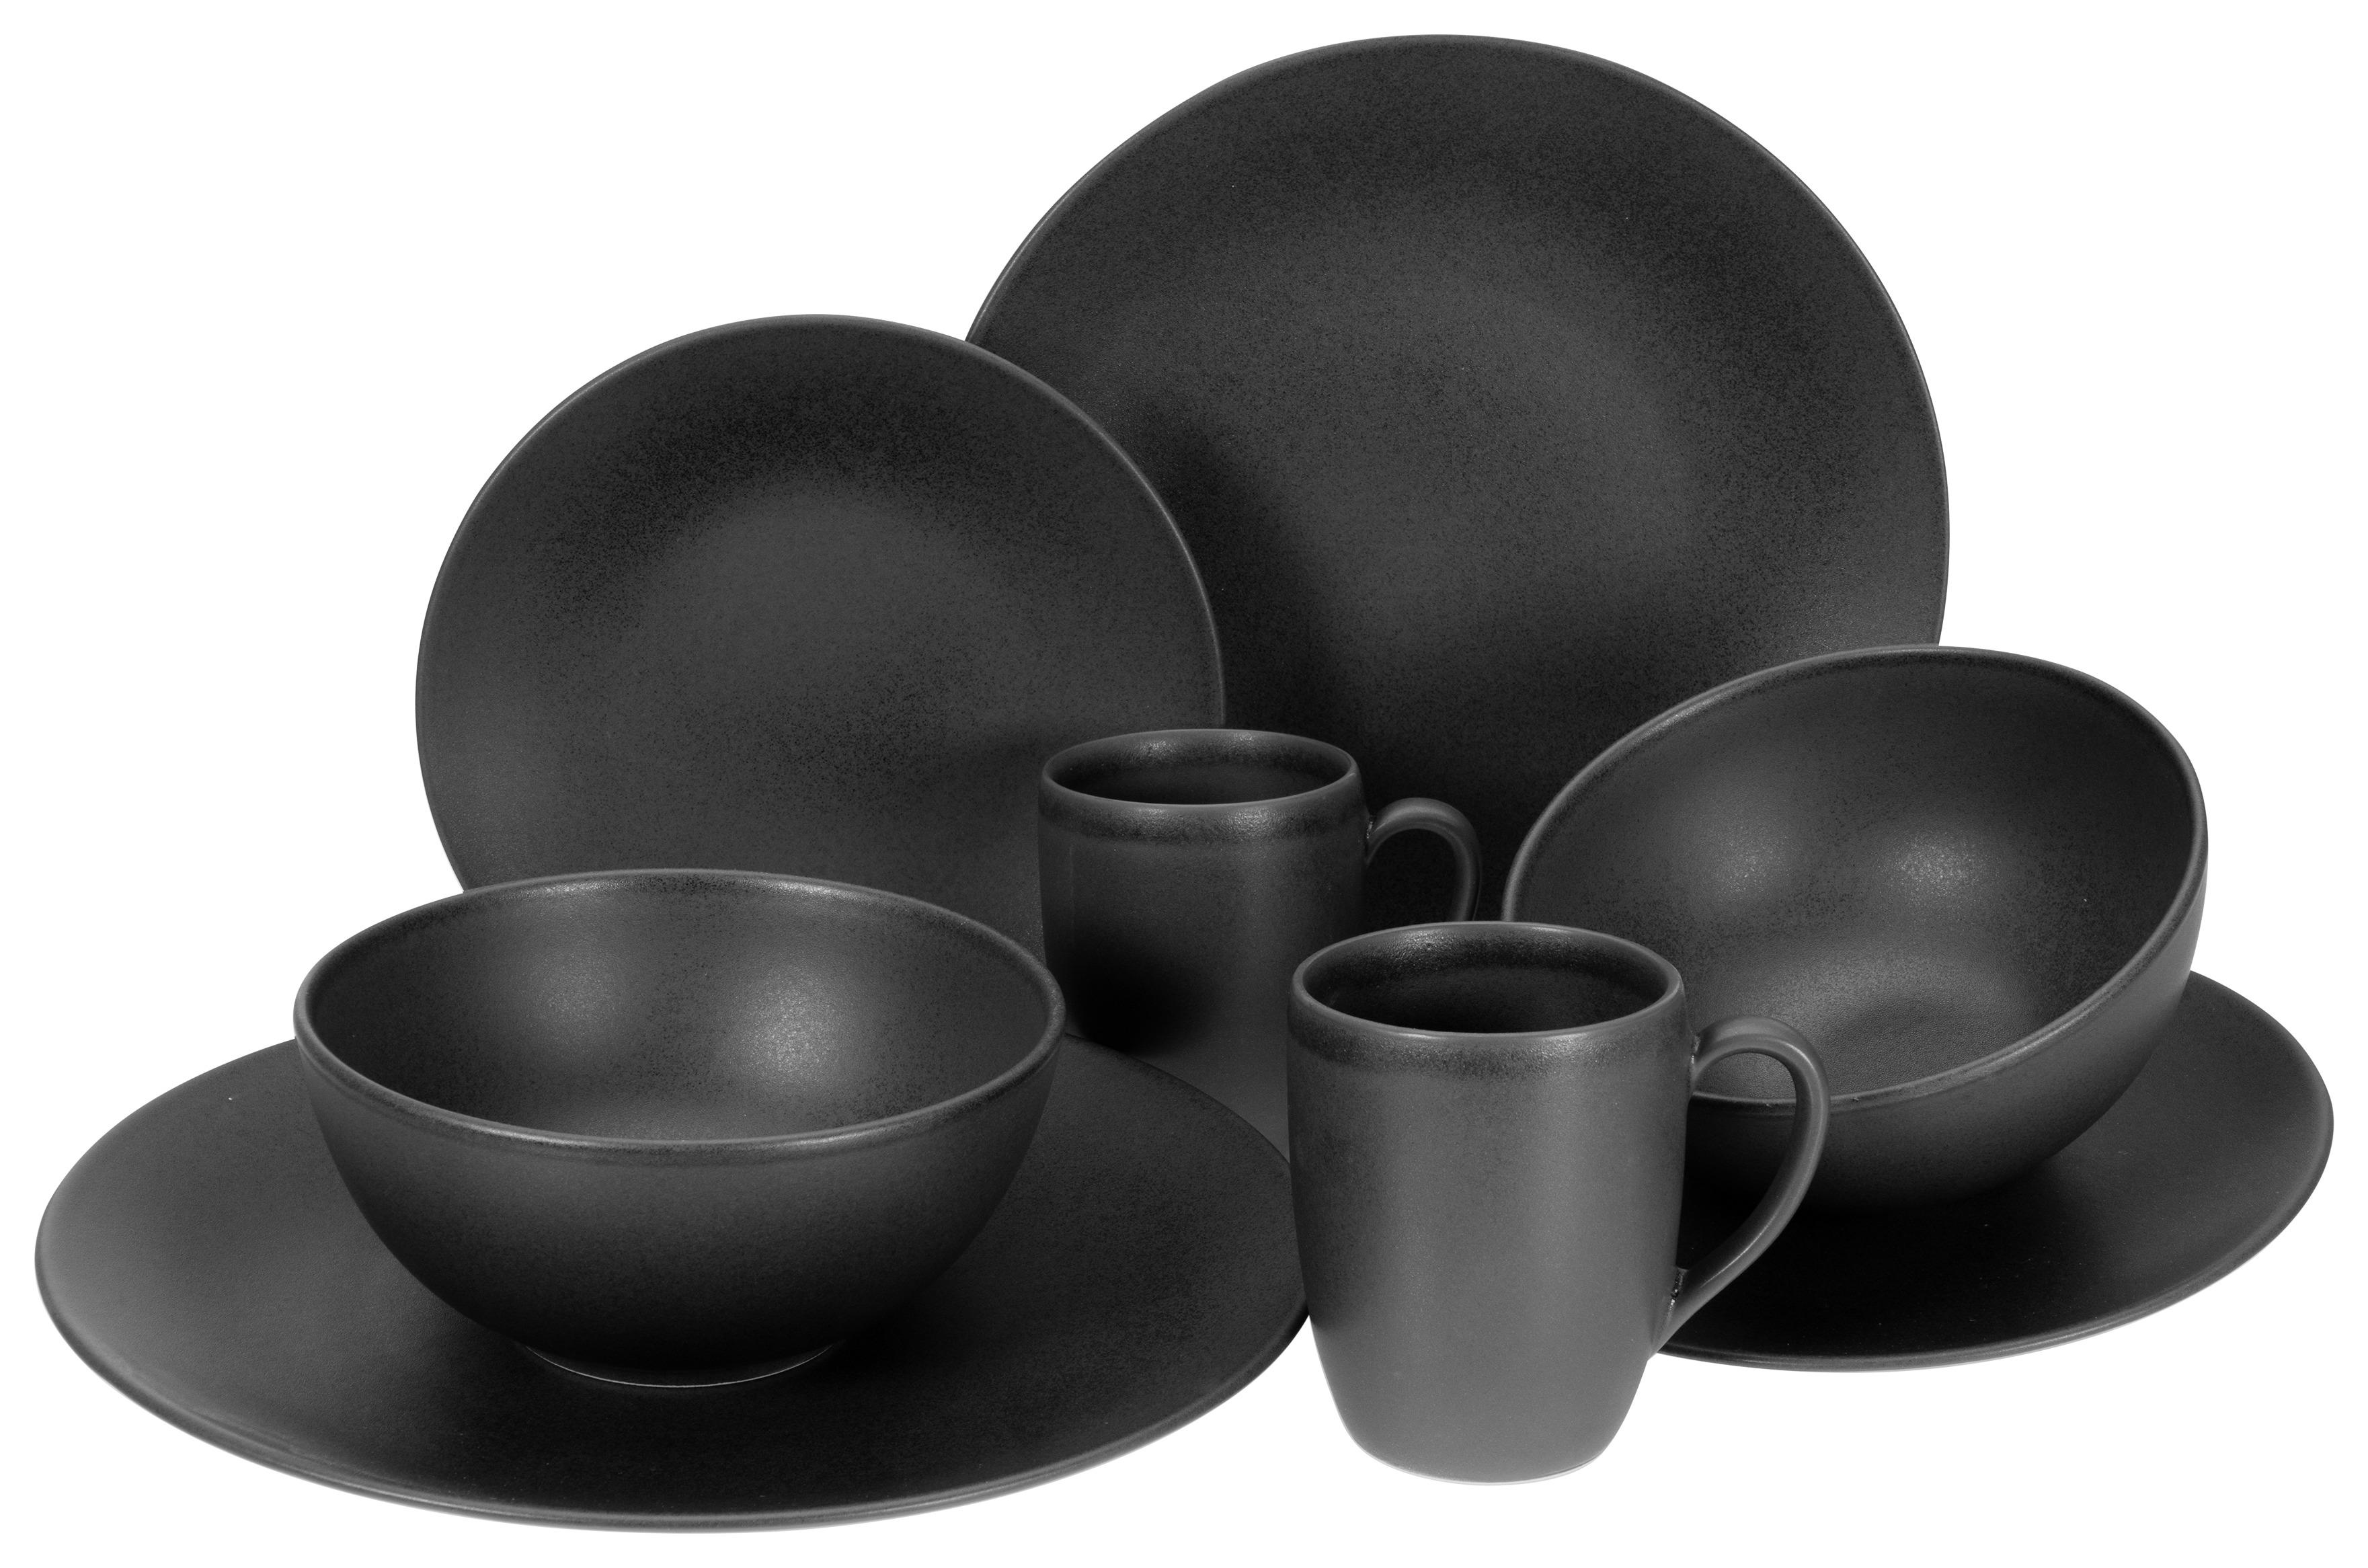 Kombiservice Soft Touch Black, 8-teilig - Schwarz, MODERN, Keramik (39,5/43/37cm) - Creatable